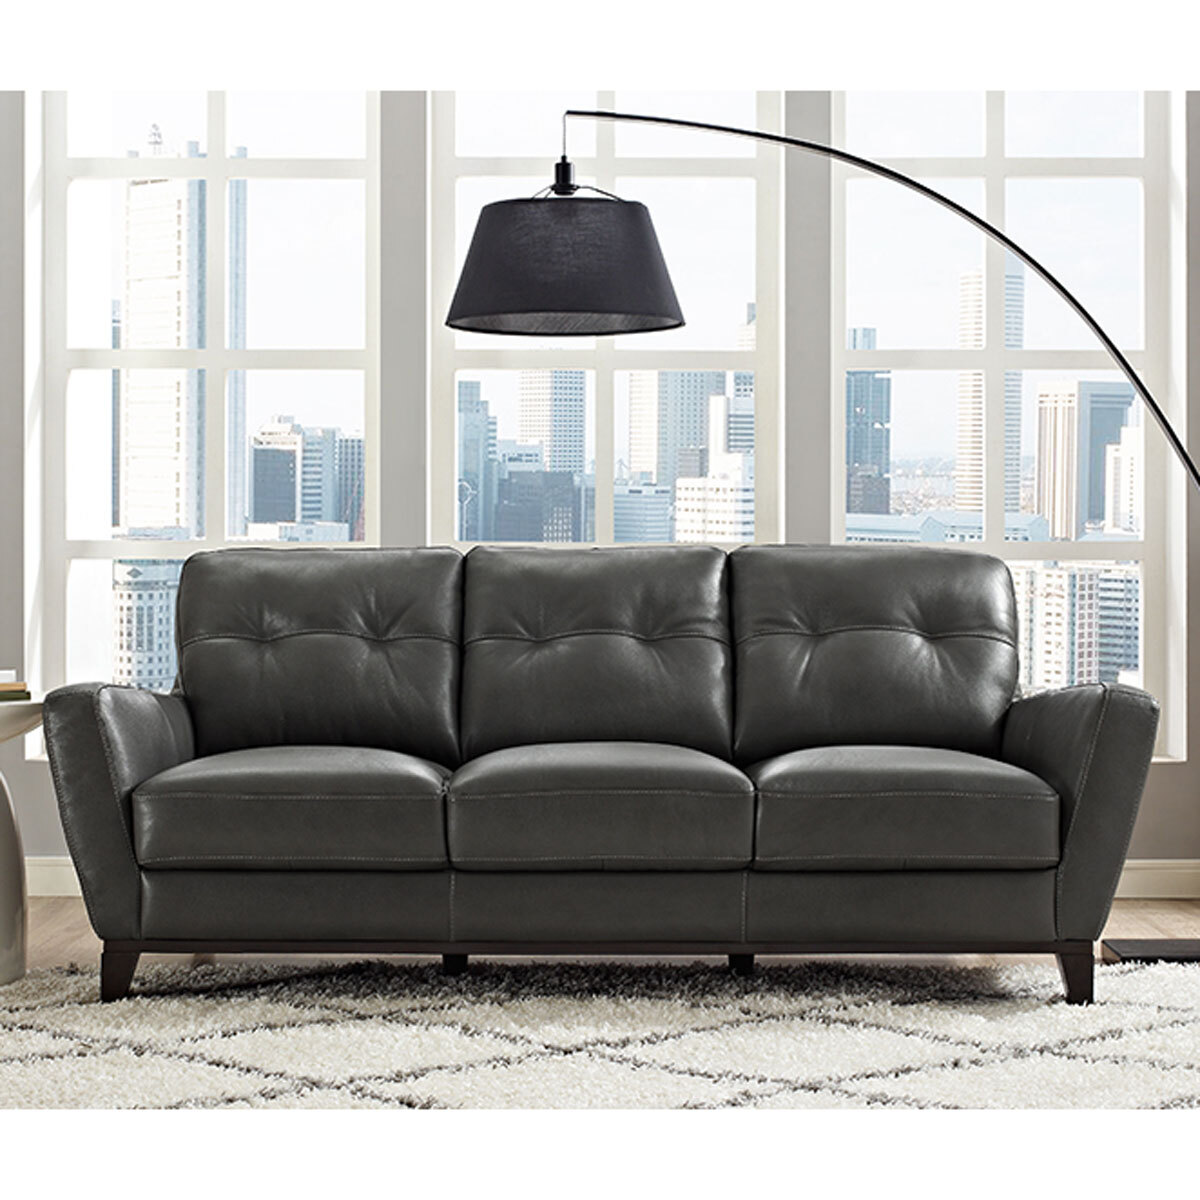 Grey Leather 3 Seater Sofa Costco Uk, Leather Sofa Natuzzi